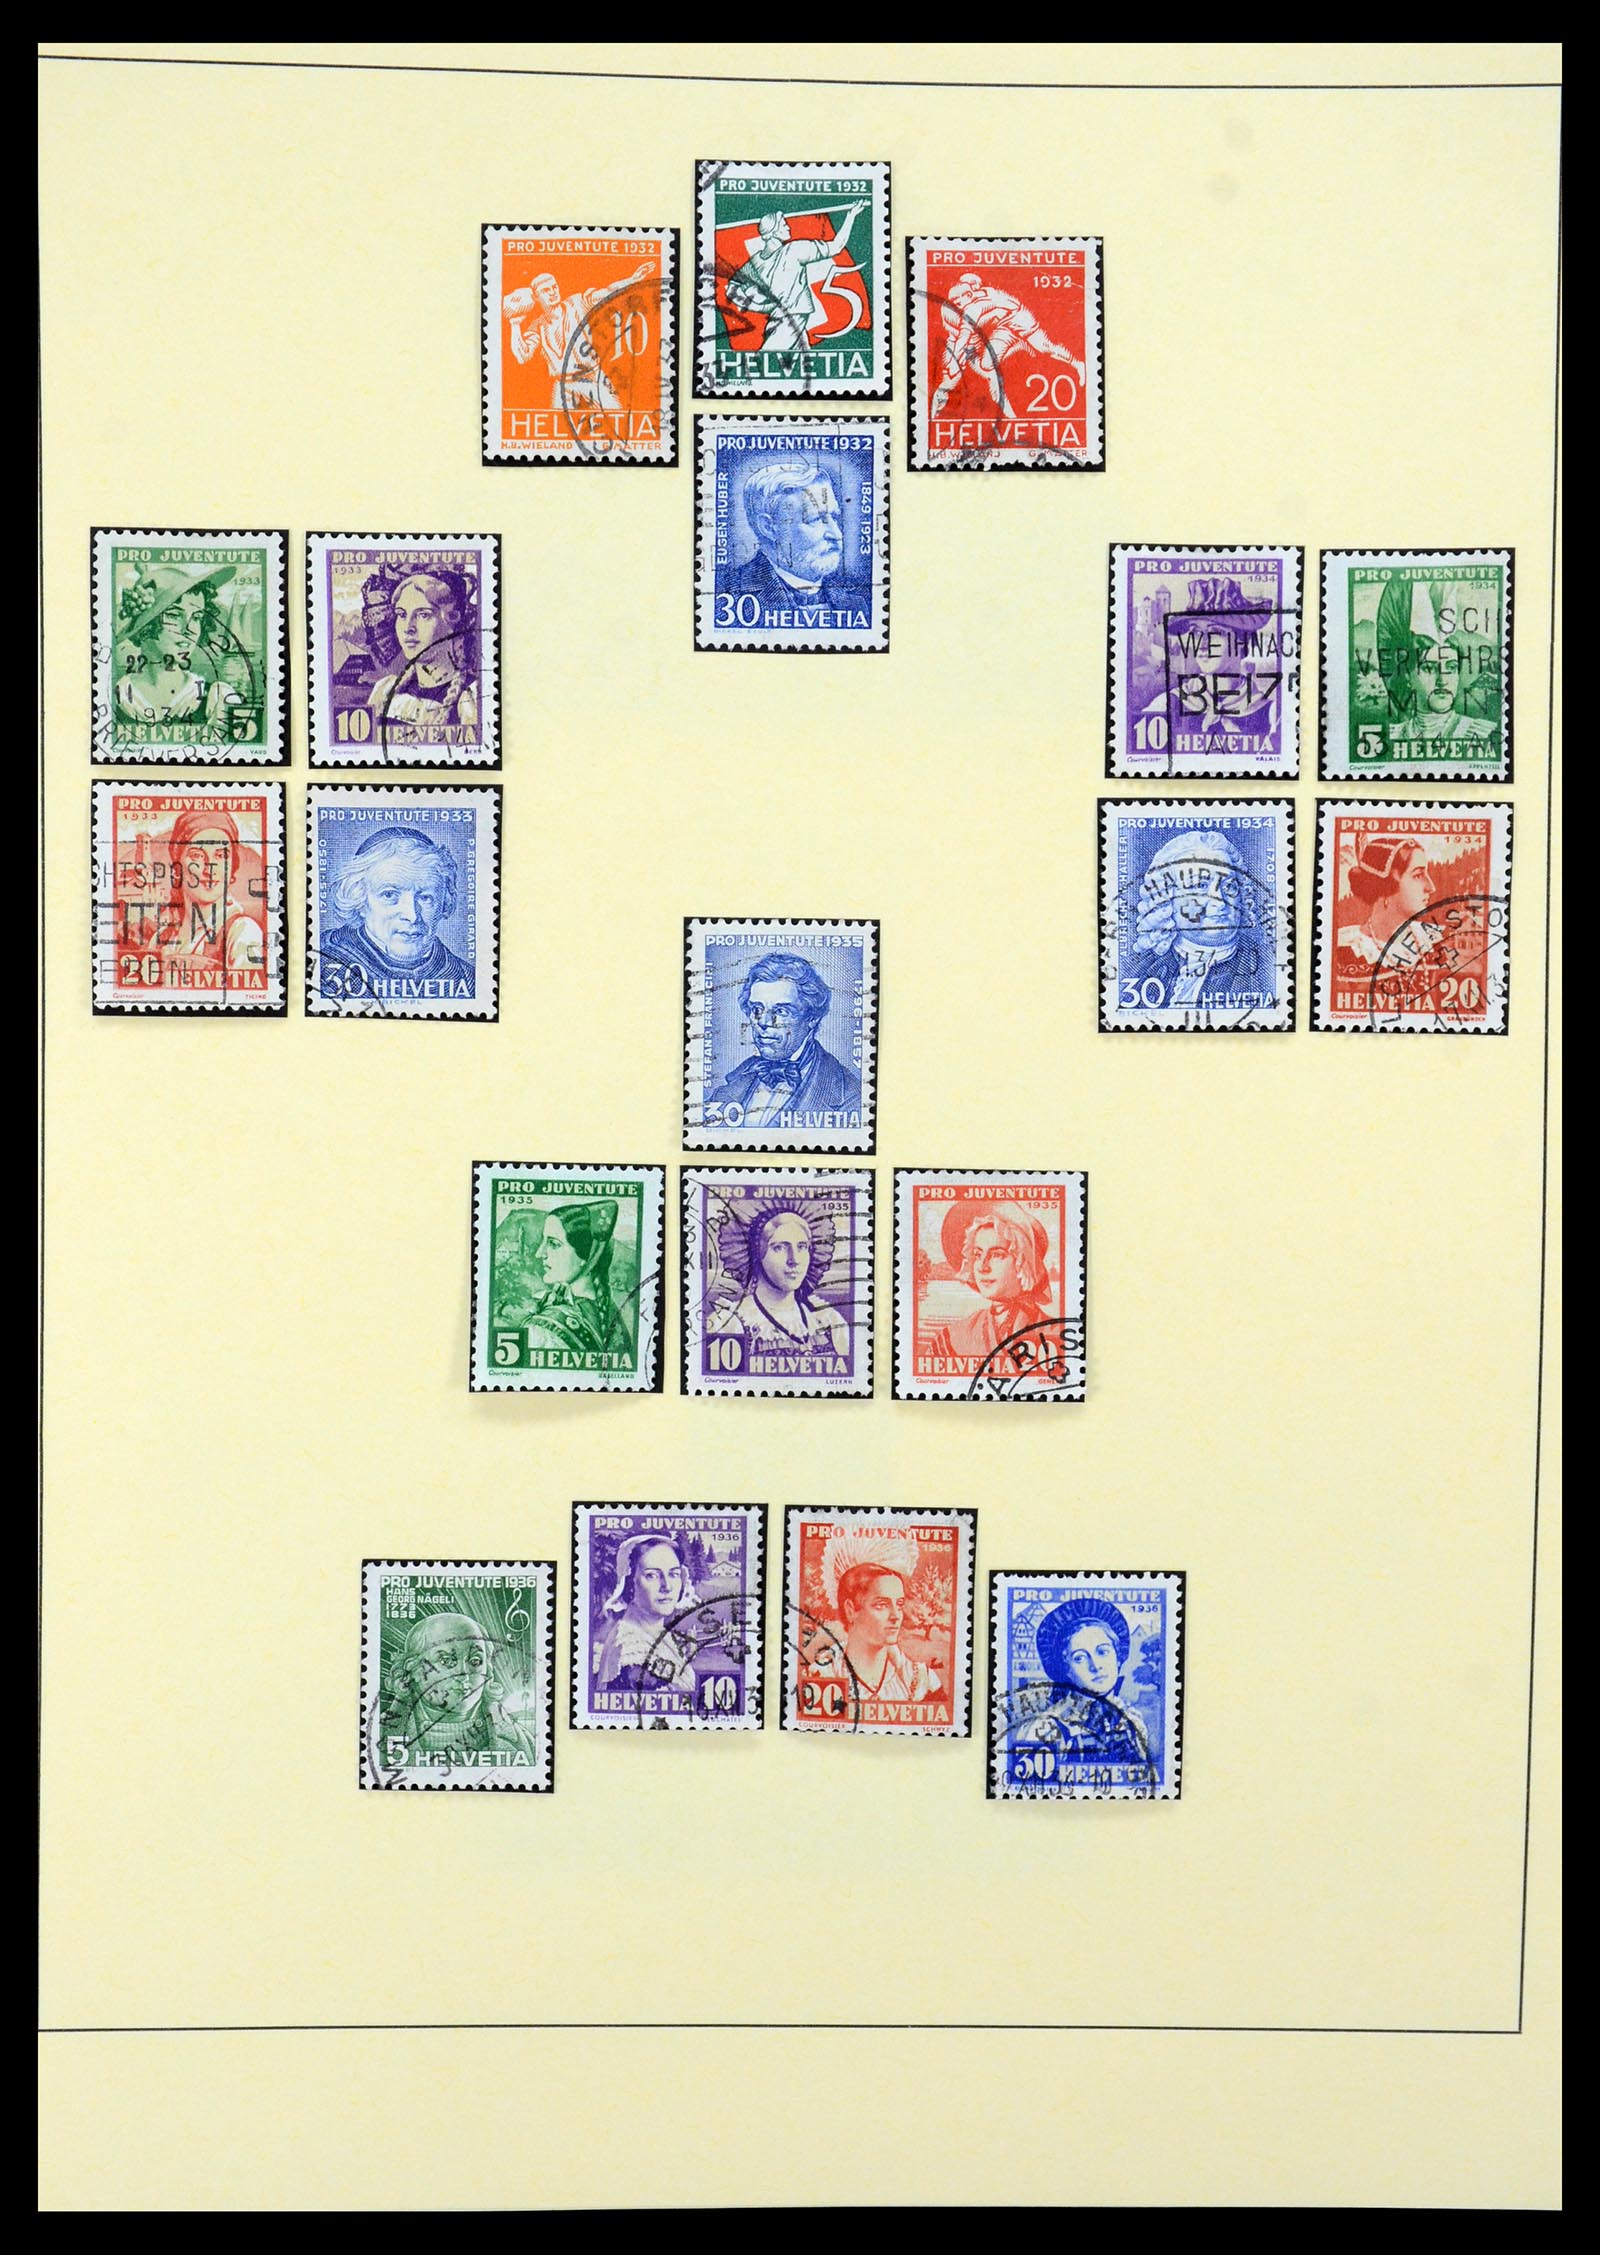 35668 004 - Stamp Collection 35668 Switzerland Pro Juventute and Pro Patria 1910-197